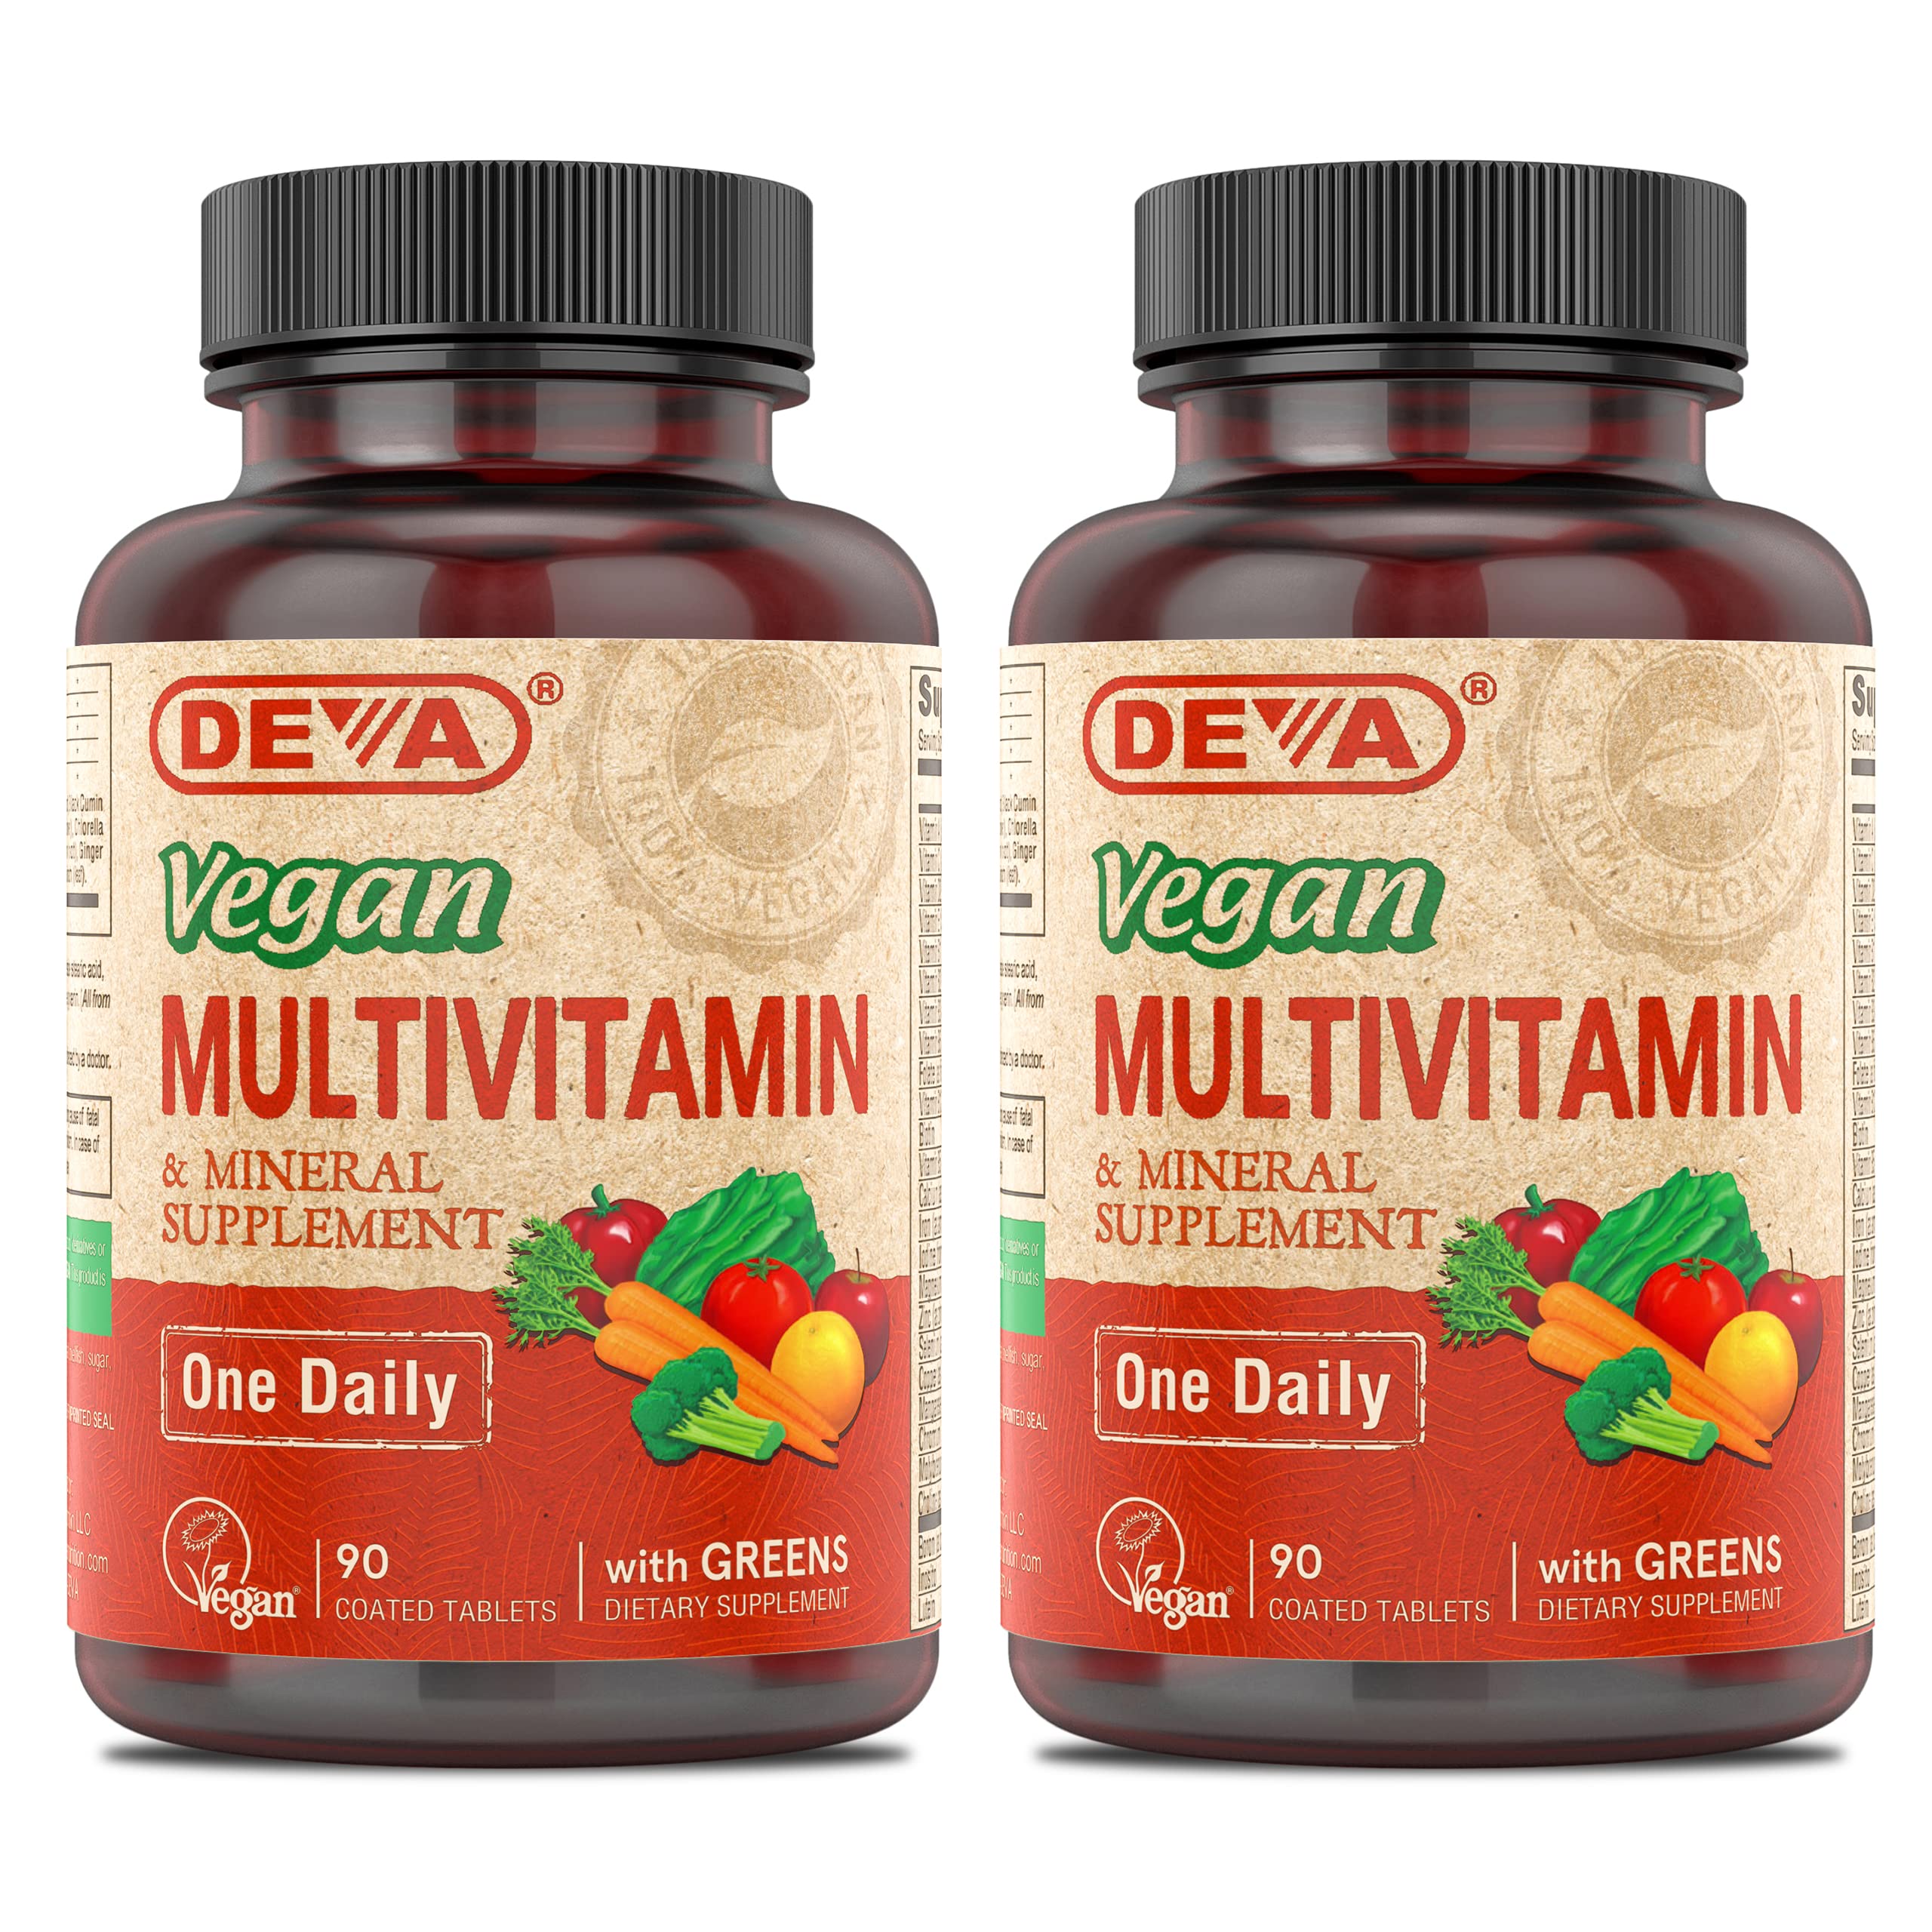 Deva Vegan Multivitamin